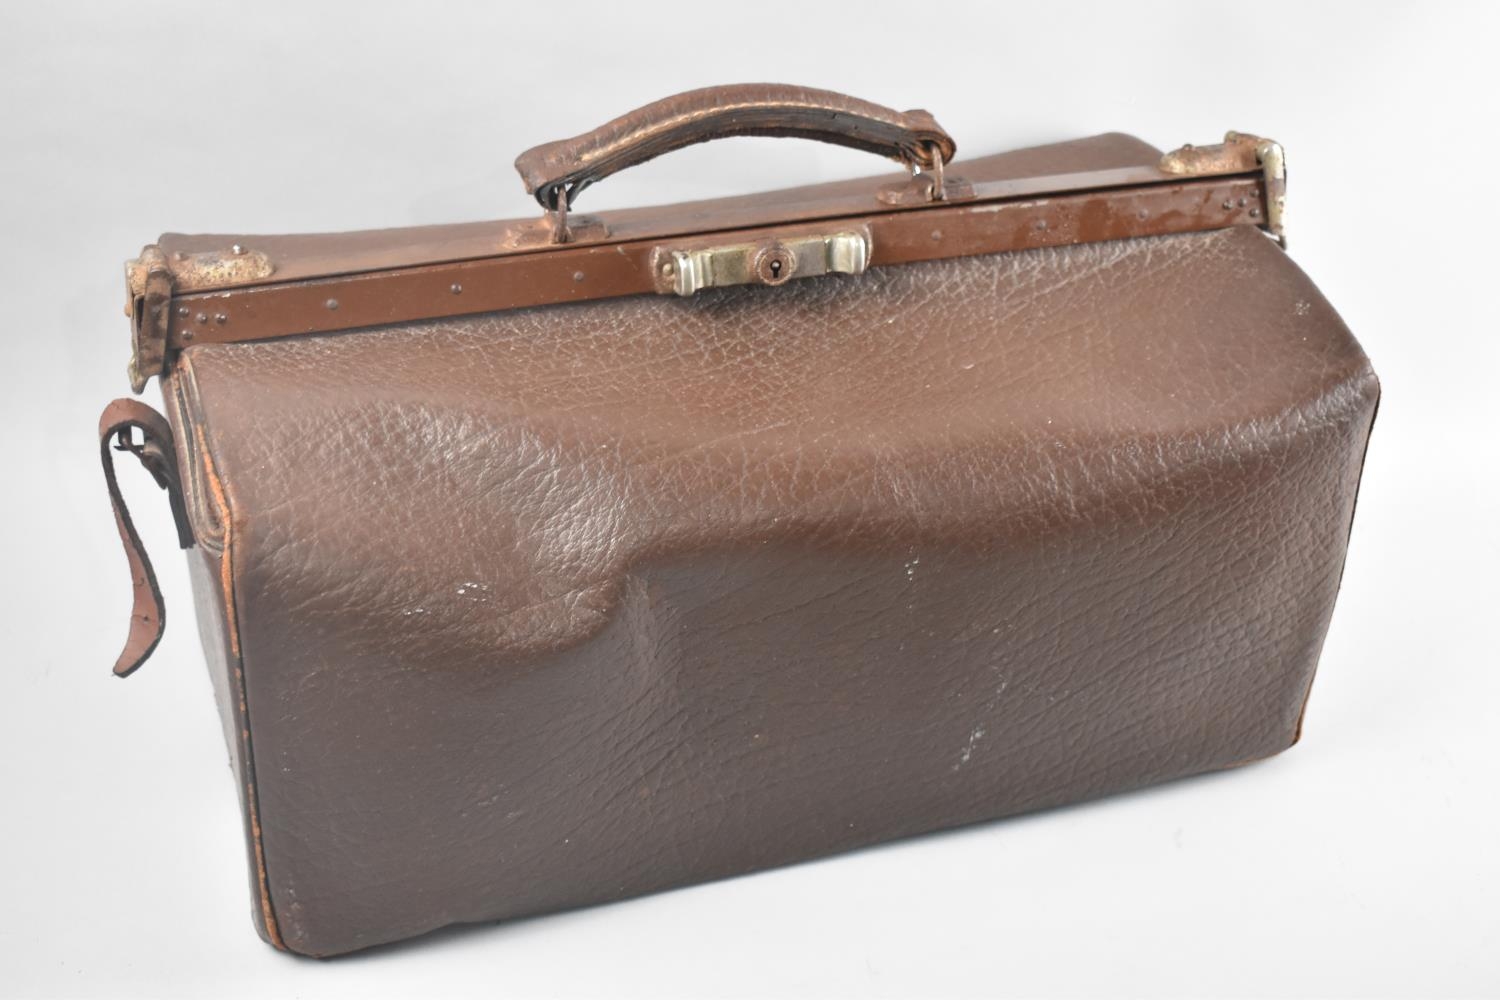 Sold at Auction: Large vintage leather Gladstone bag